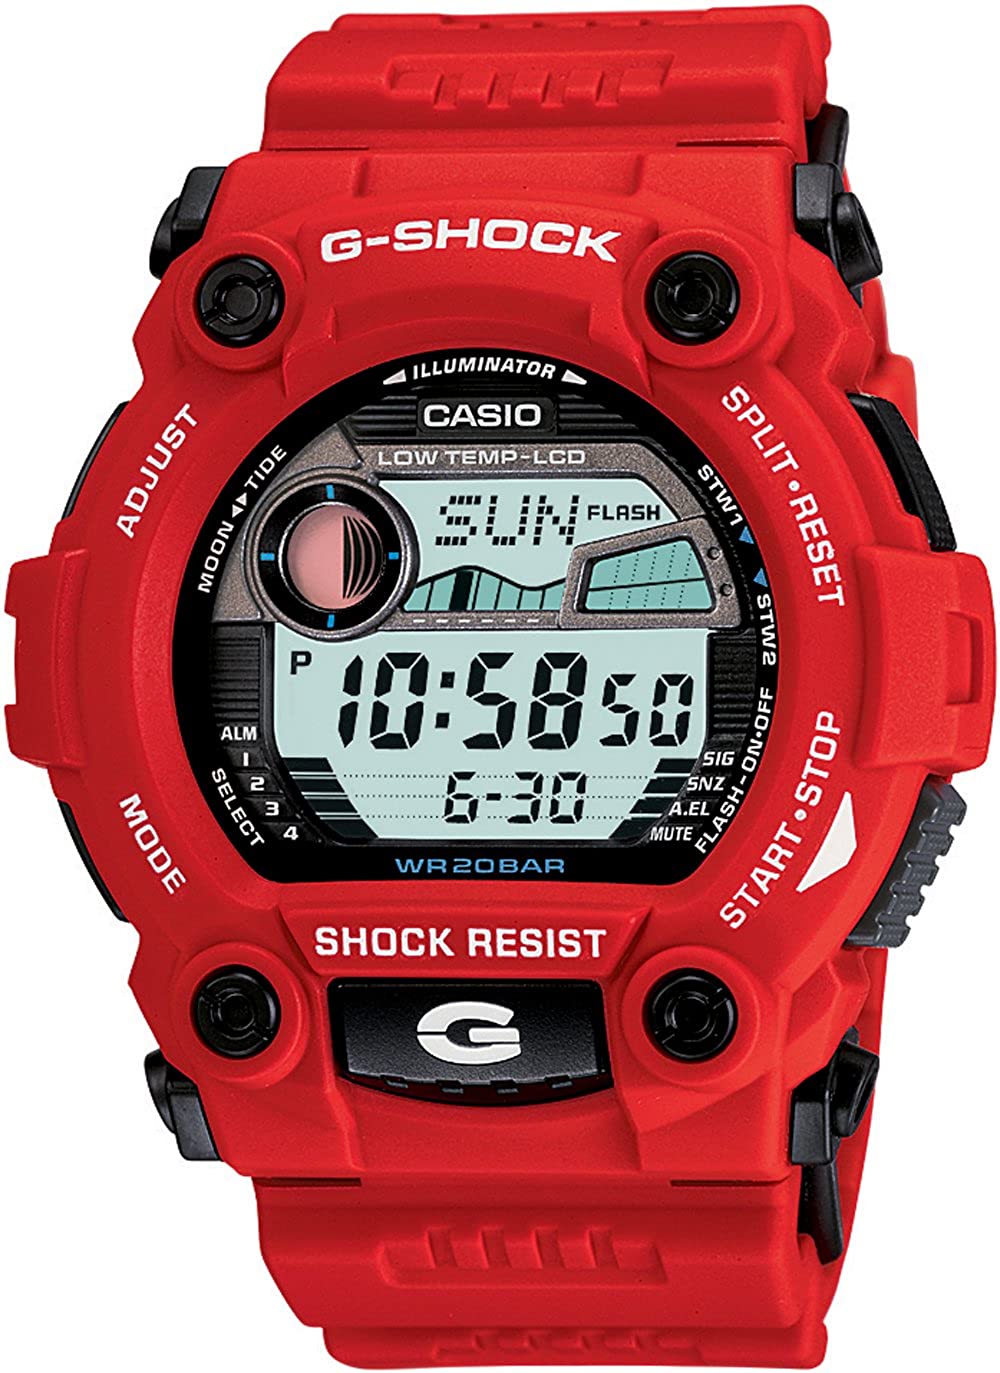 G-SHOCK G7900A-4